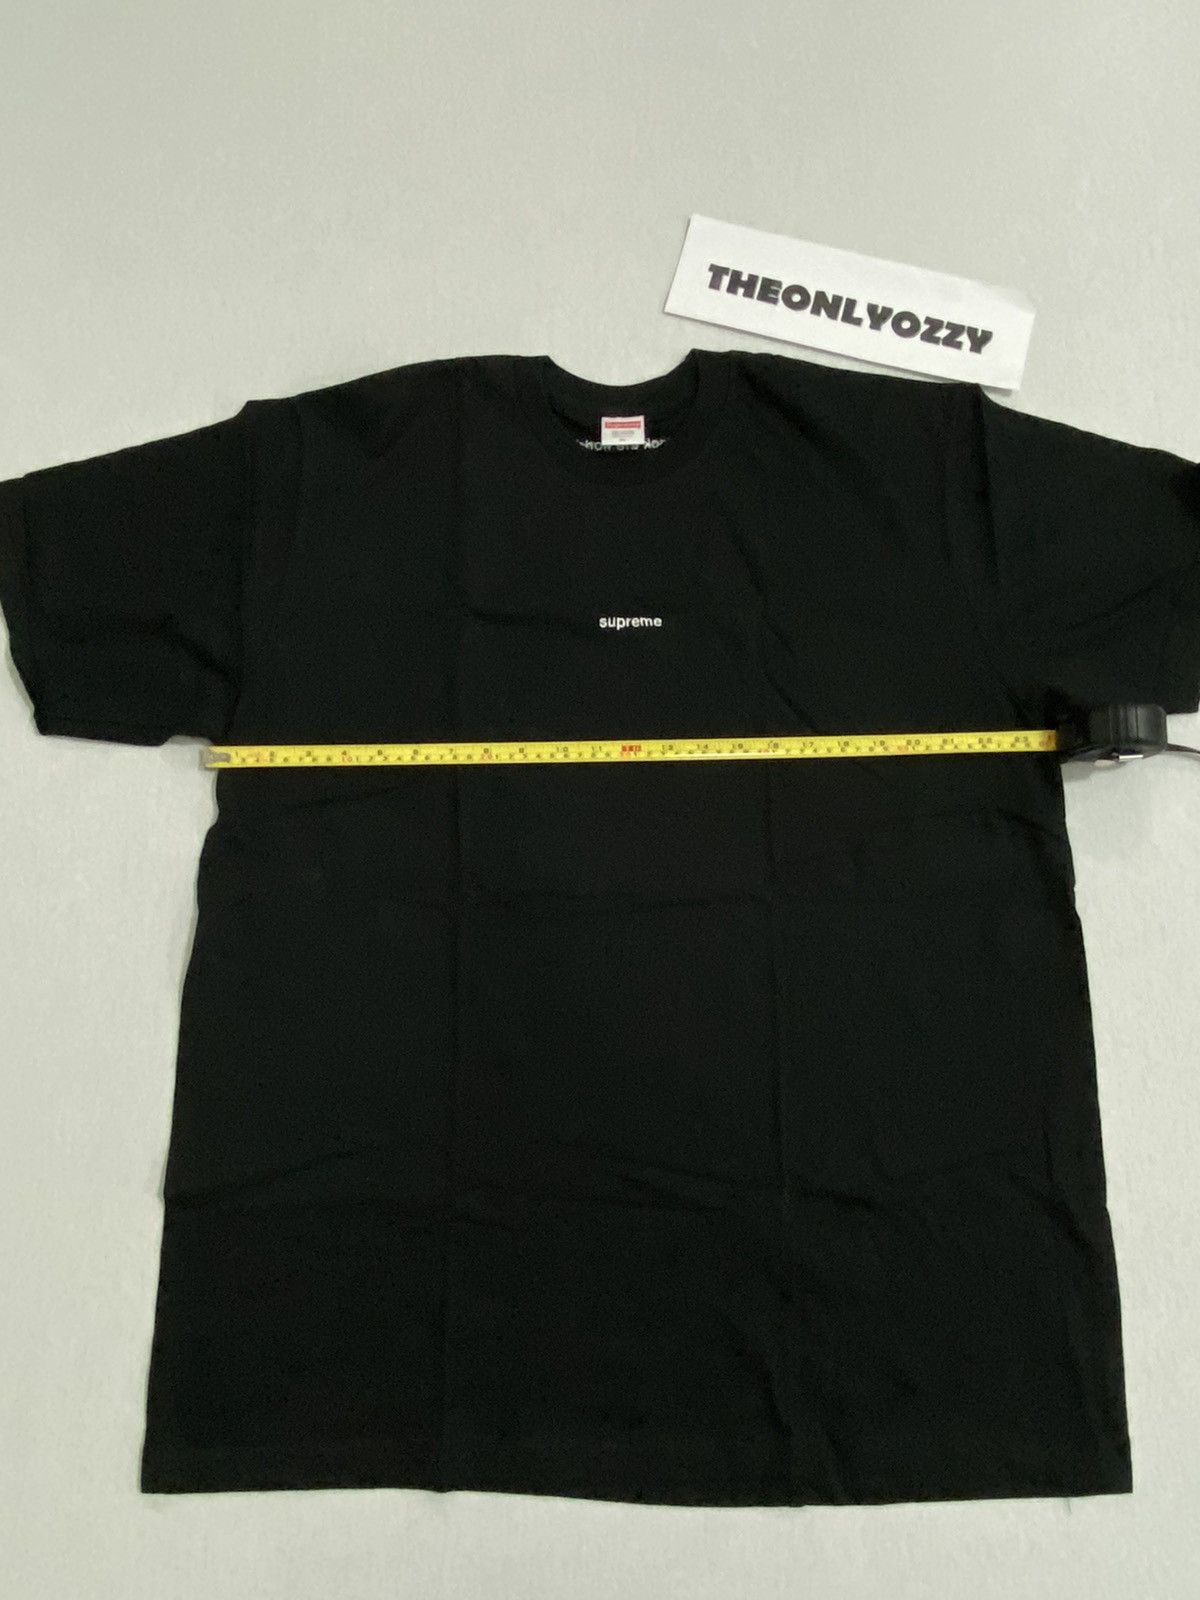 Supreme Supreme FTW Tee Black Shirt XL | Grailed